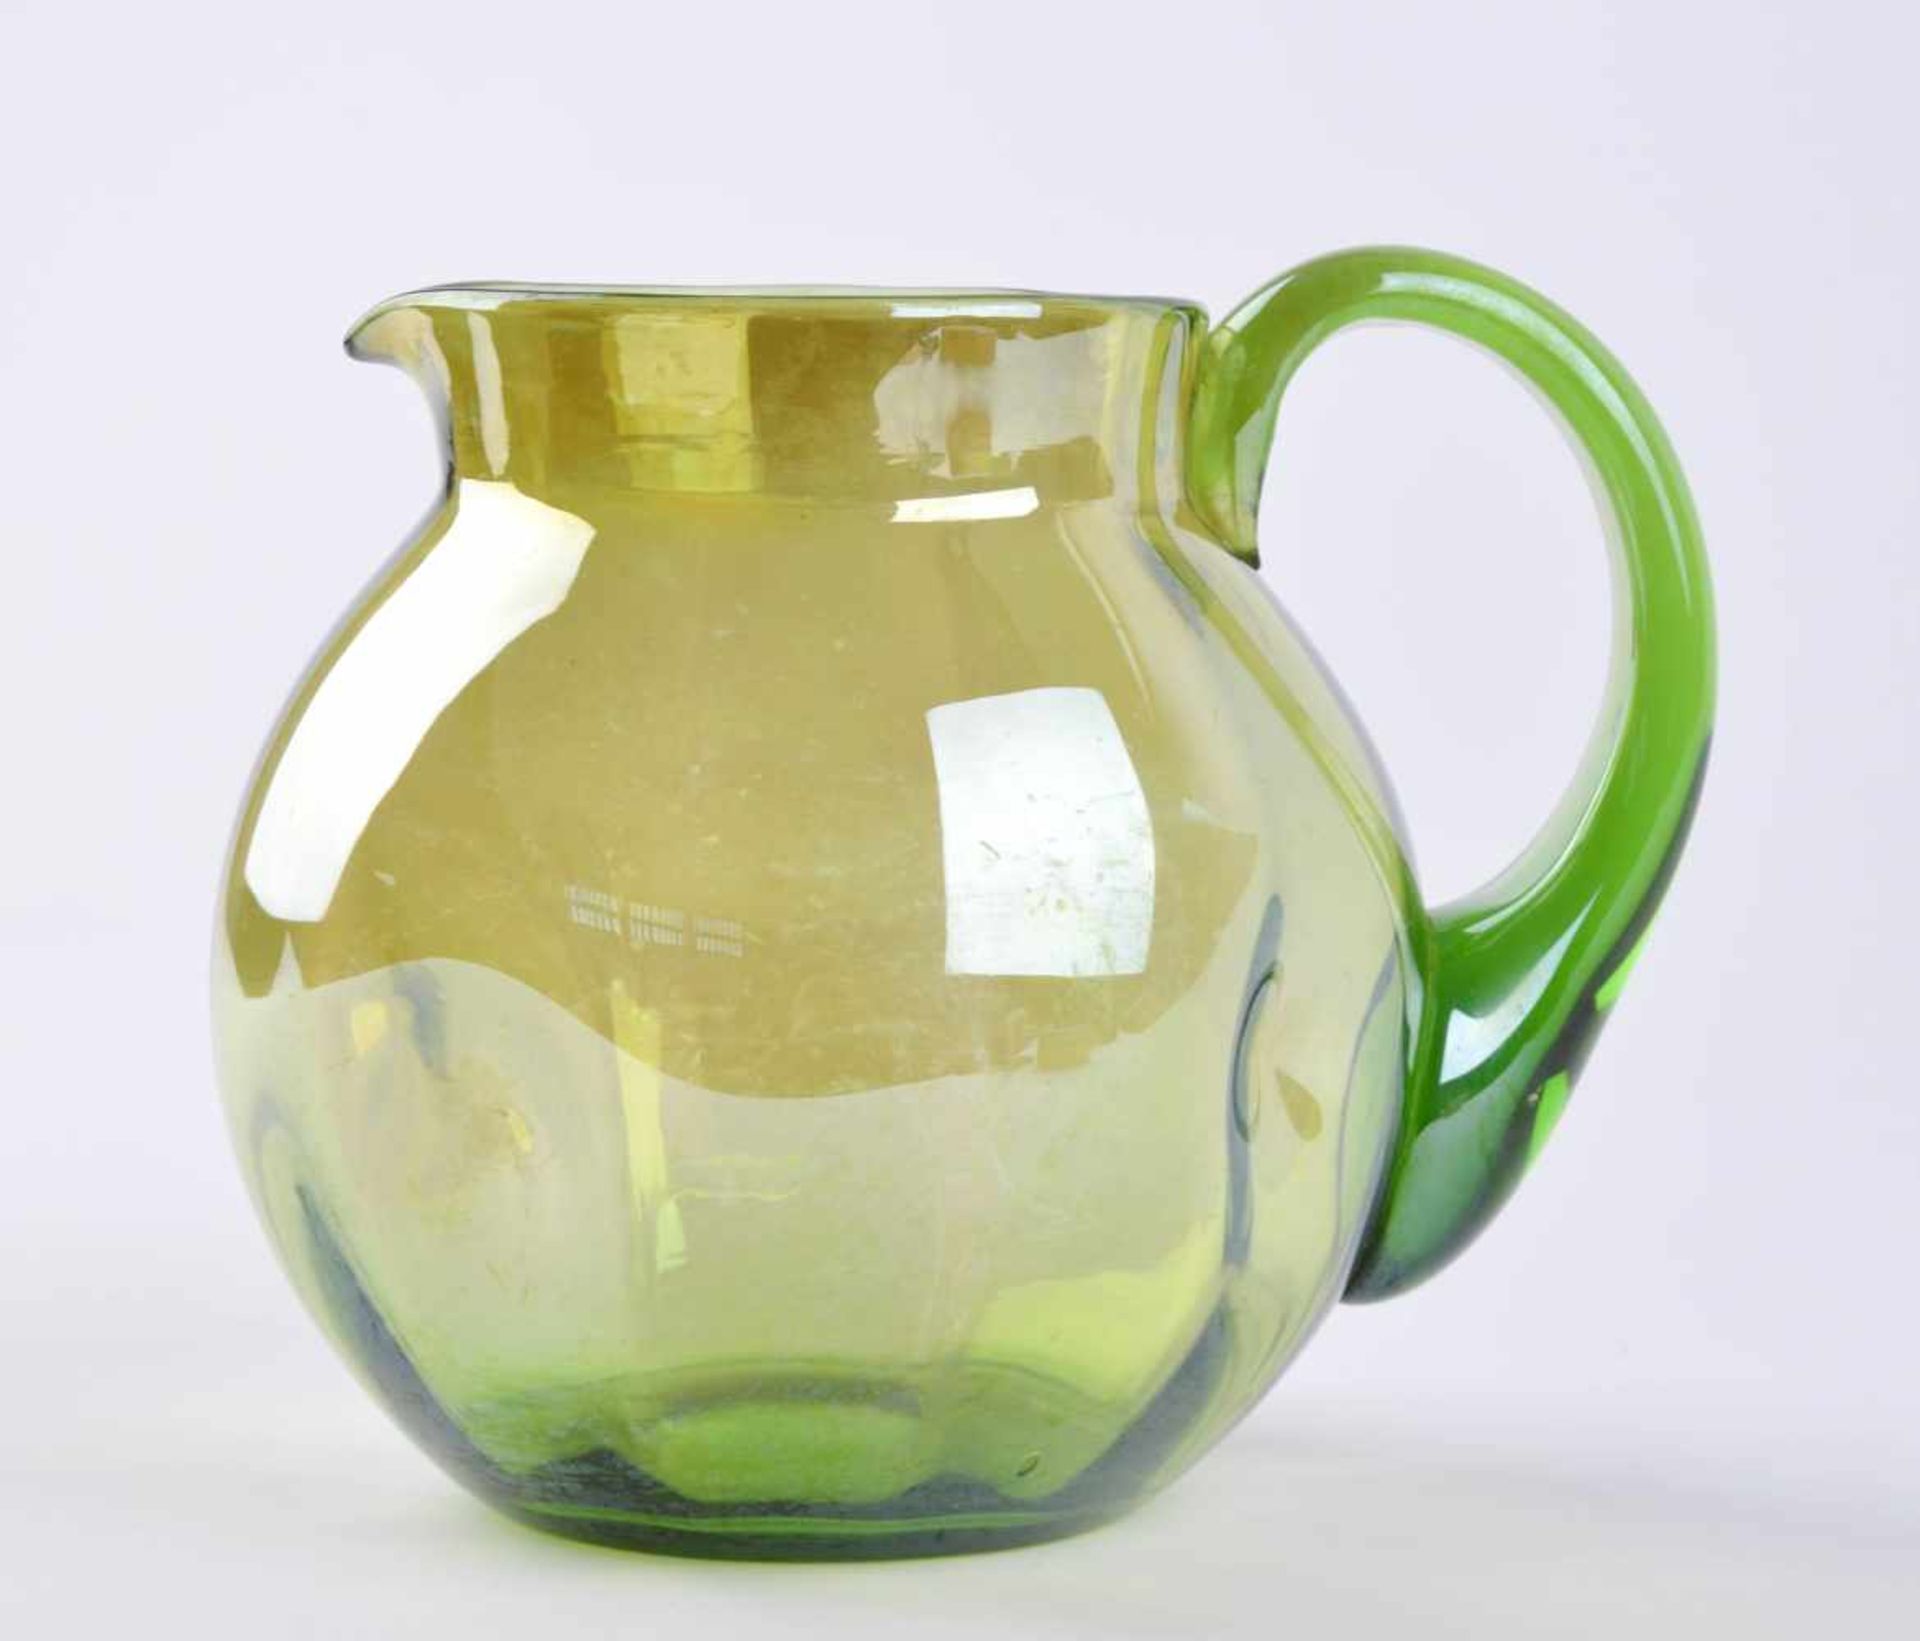 Krug wohl Lötzgrün irisierendes Glas, wohl Maria Kirchner, H: 15 cmKrug probably Lötzgreen